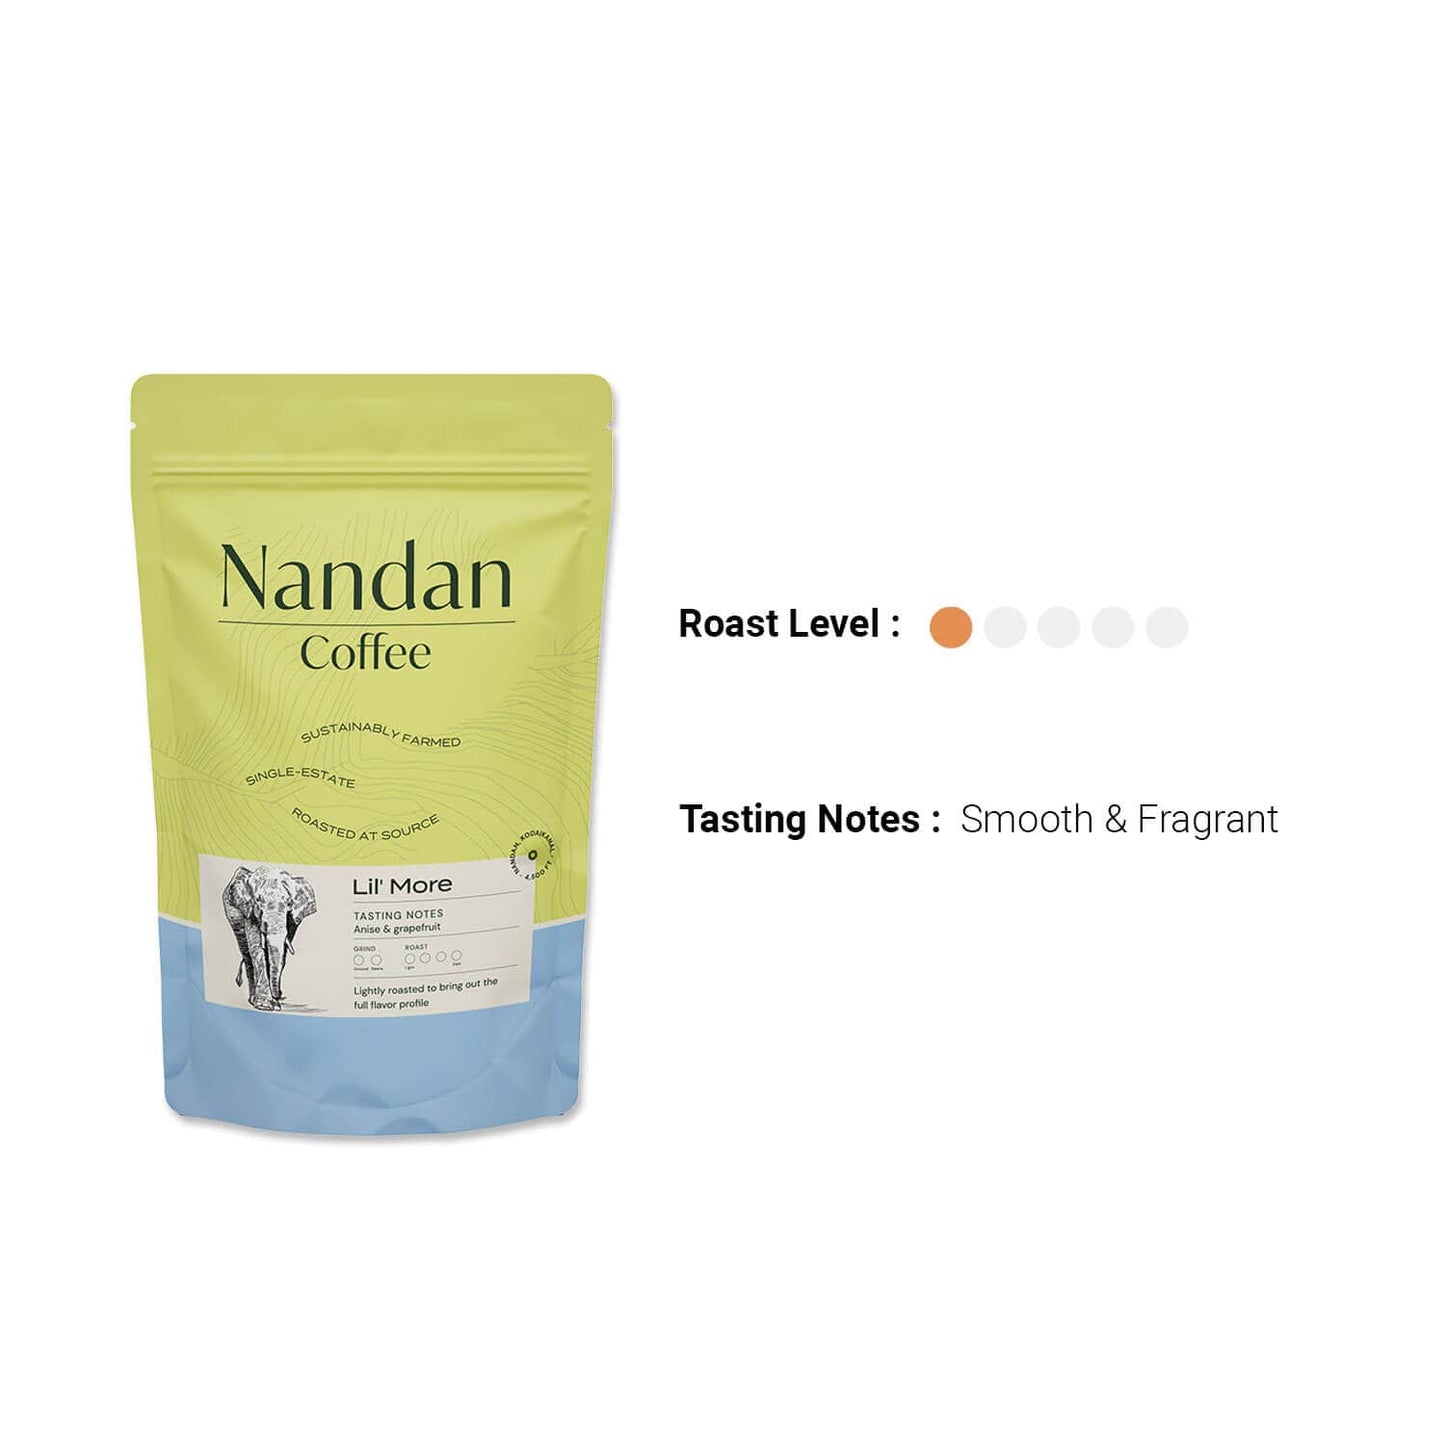 Nandan Coffee Ground And Whole Coffee Beans Nandan L'lmore Light Roast